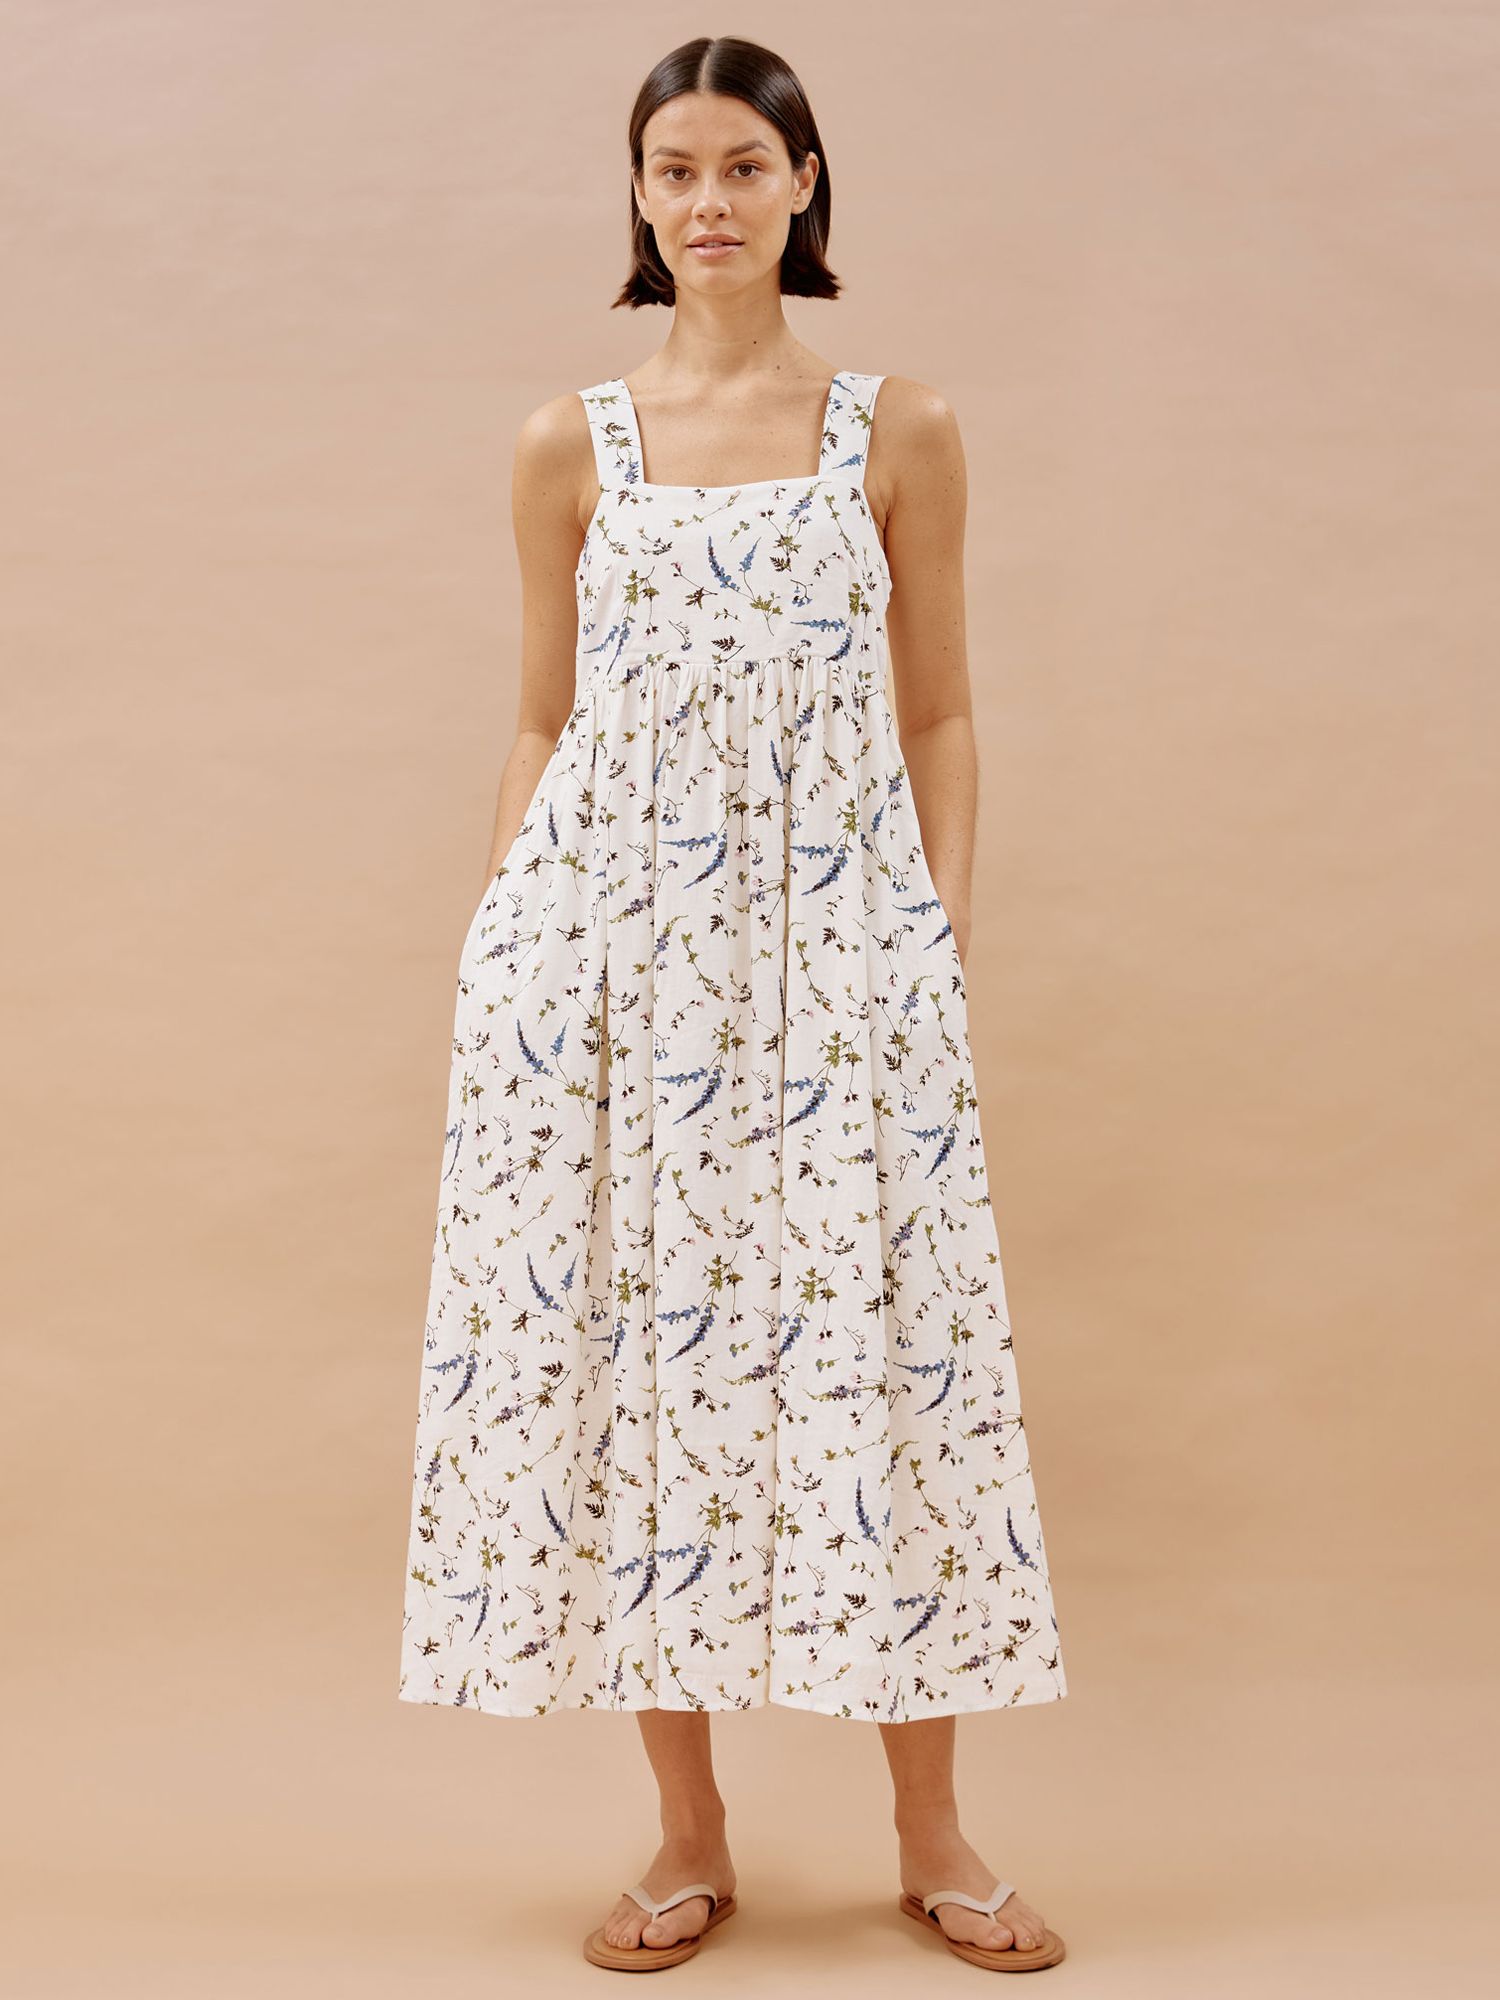 Albaray Sprig Floral Dress, White, 8